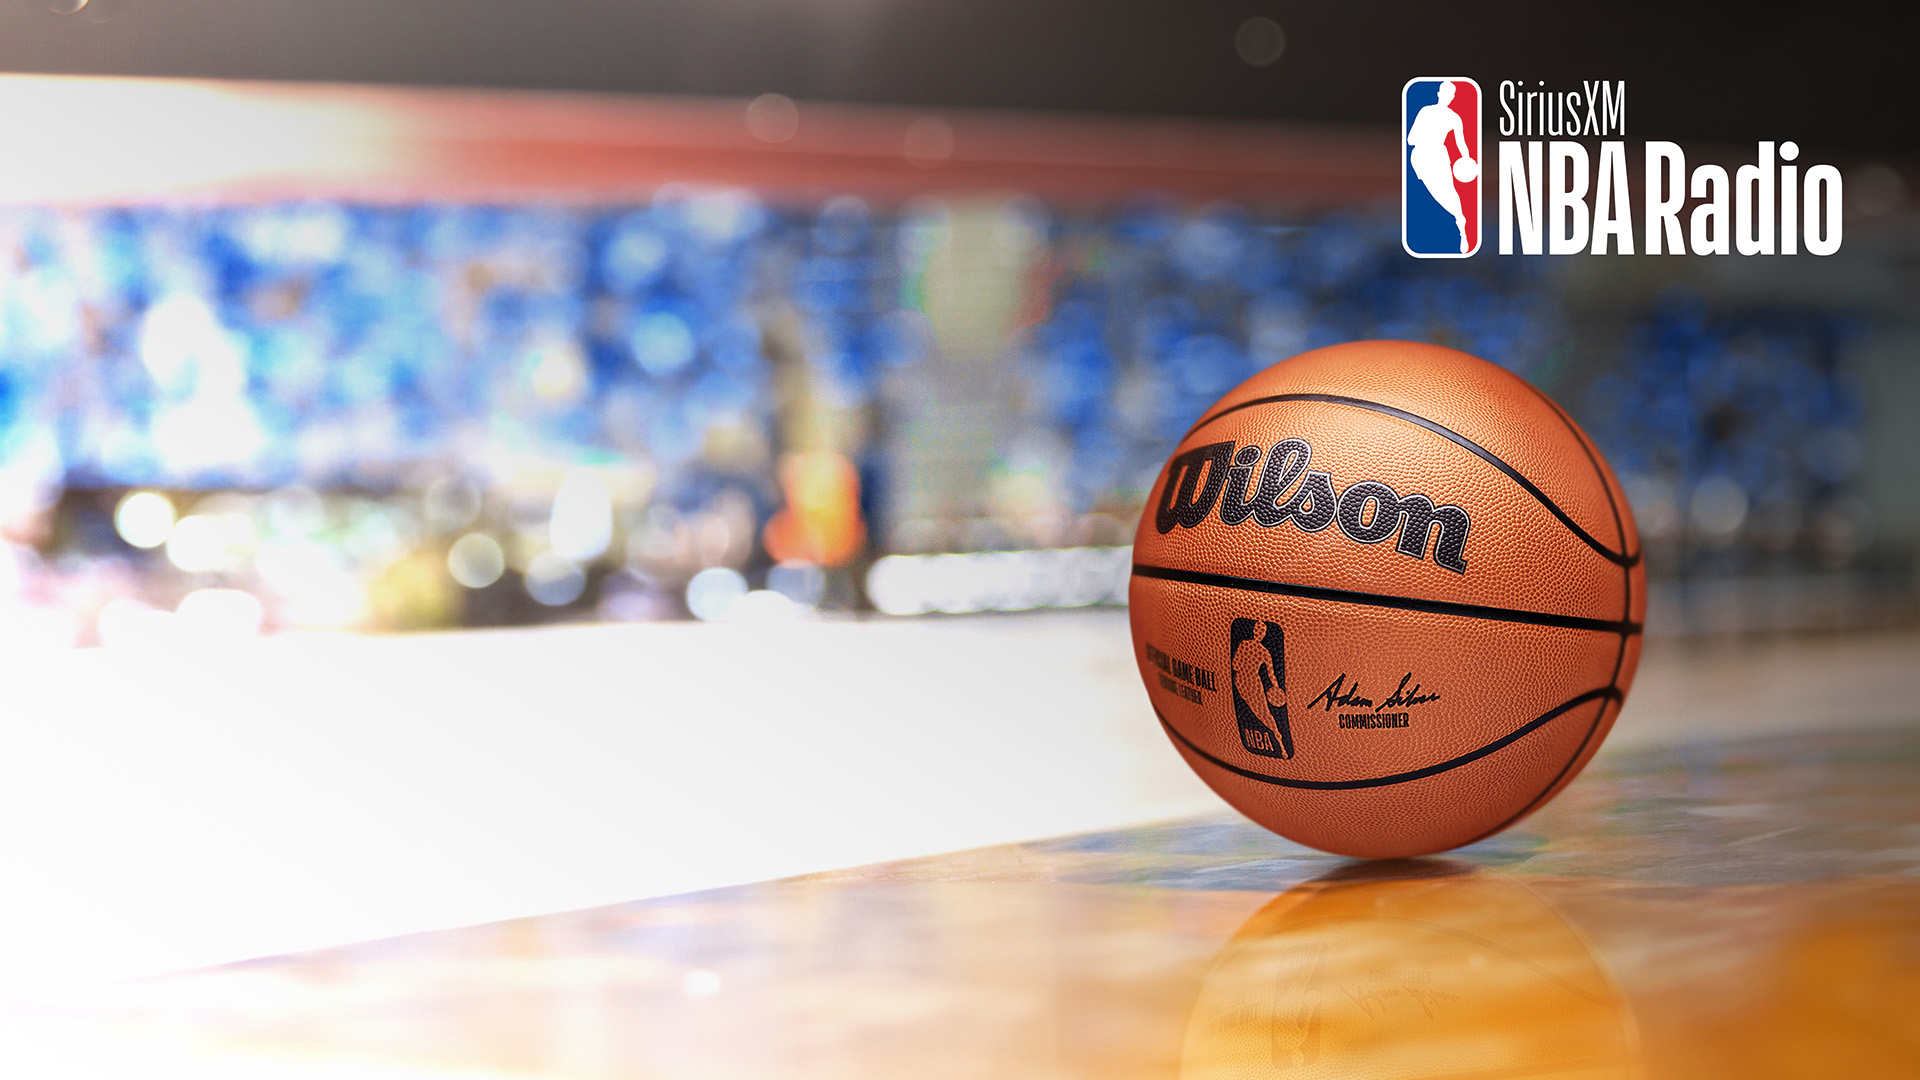 SiriusXM NBA Radio logo over a photo of a Wilson basketball